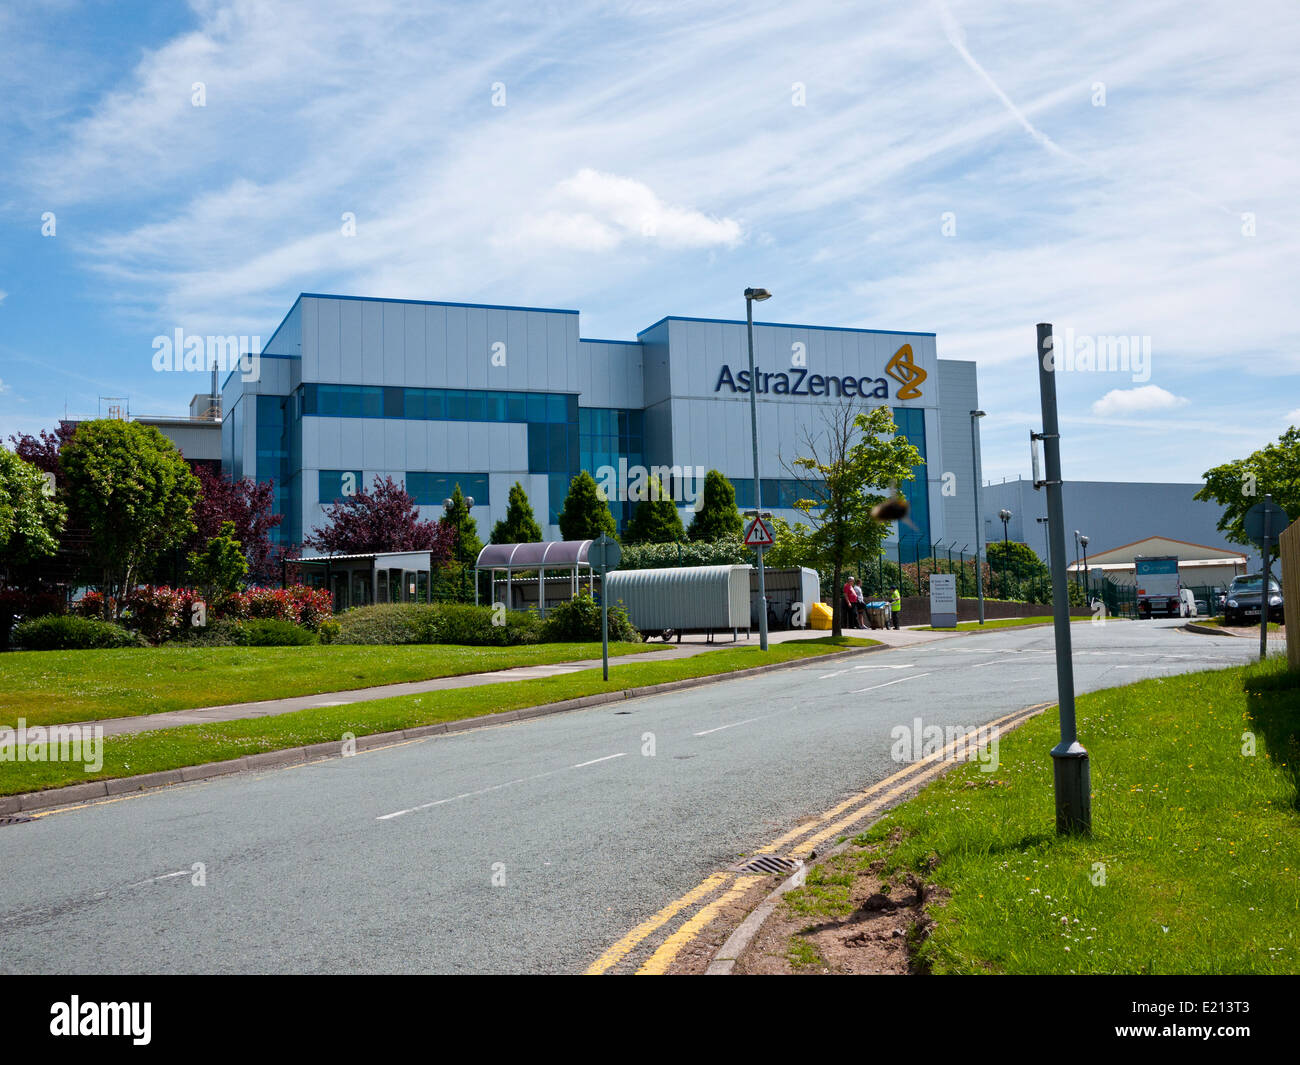 AstraZeneca Research Campus, Macclesfield, Cheshire, England, UK. Stockfoto